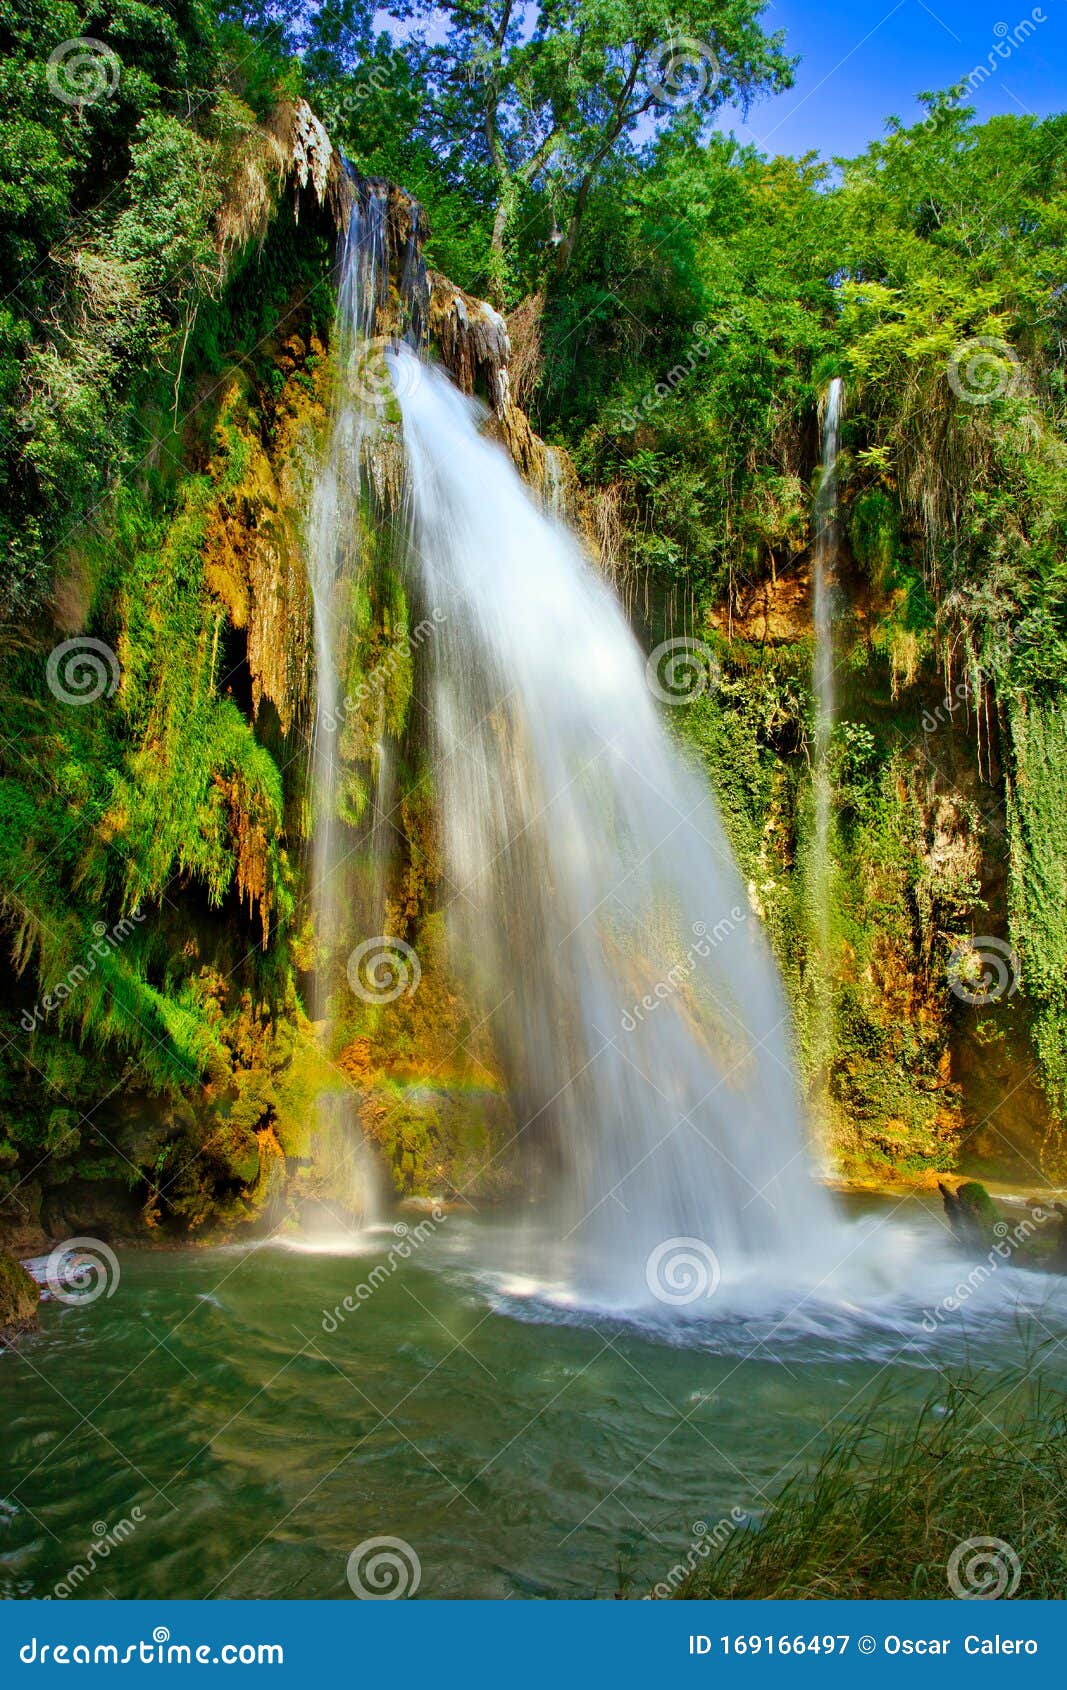 waterfall at monasterio de piedra